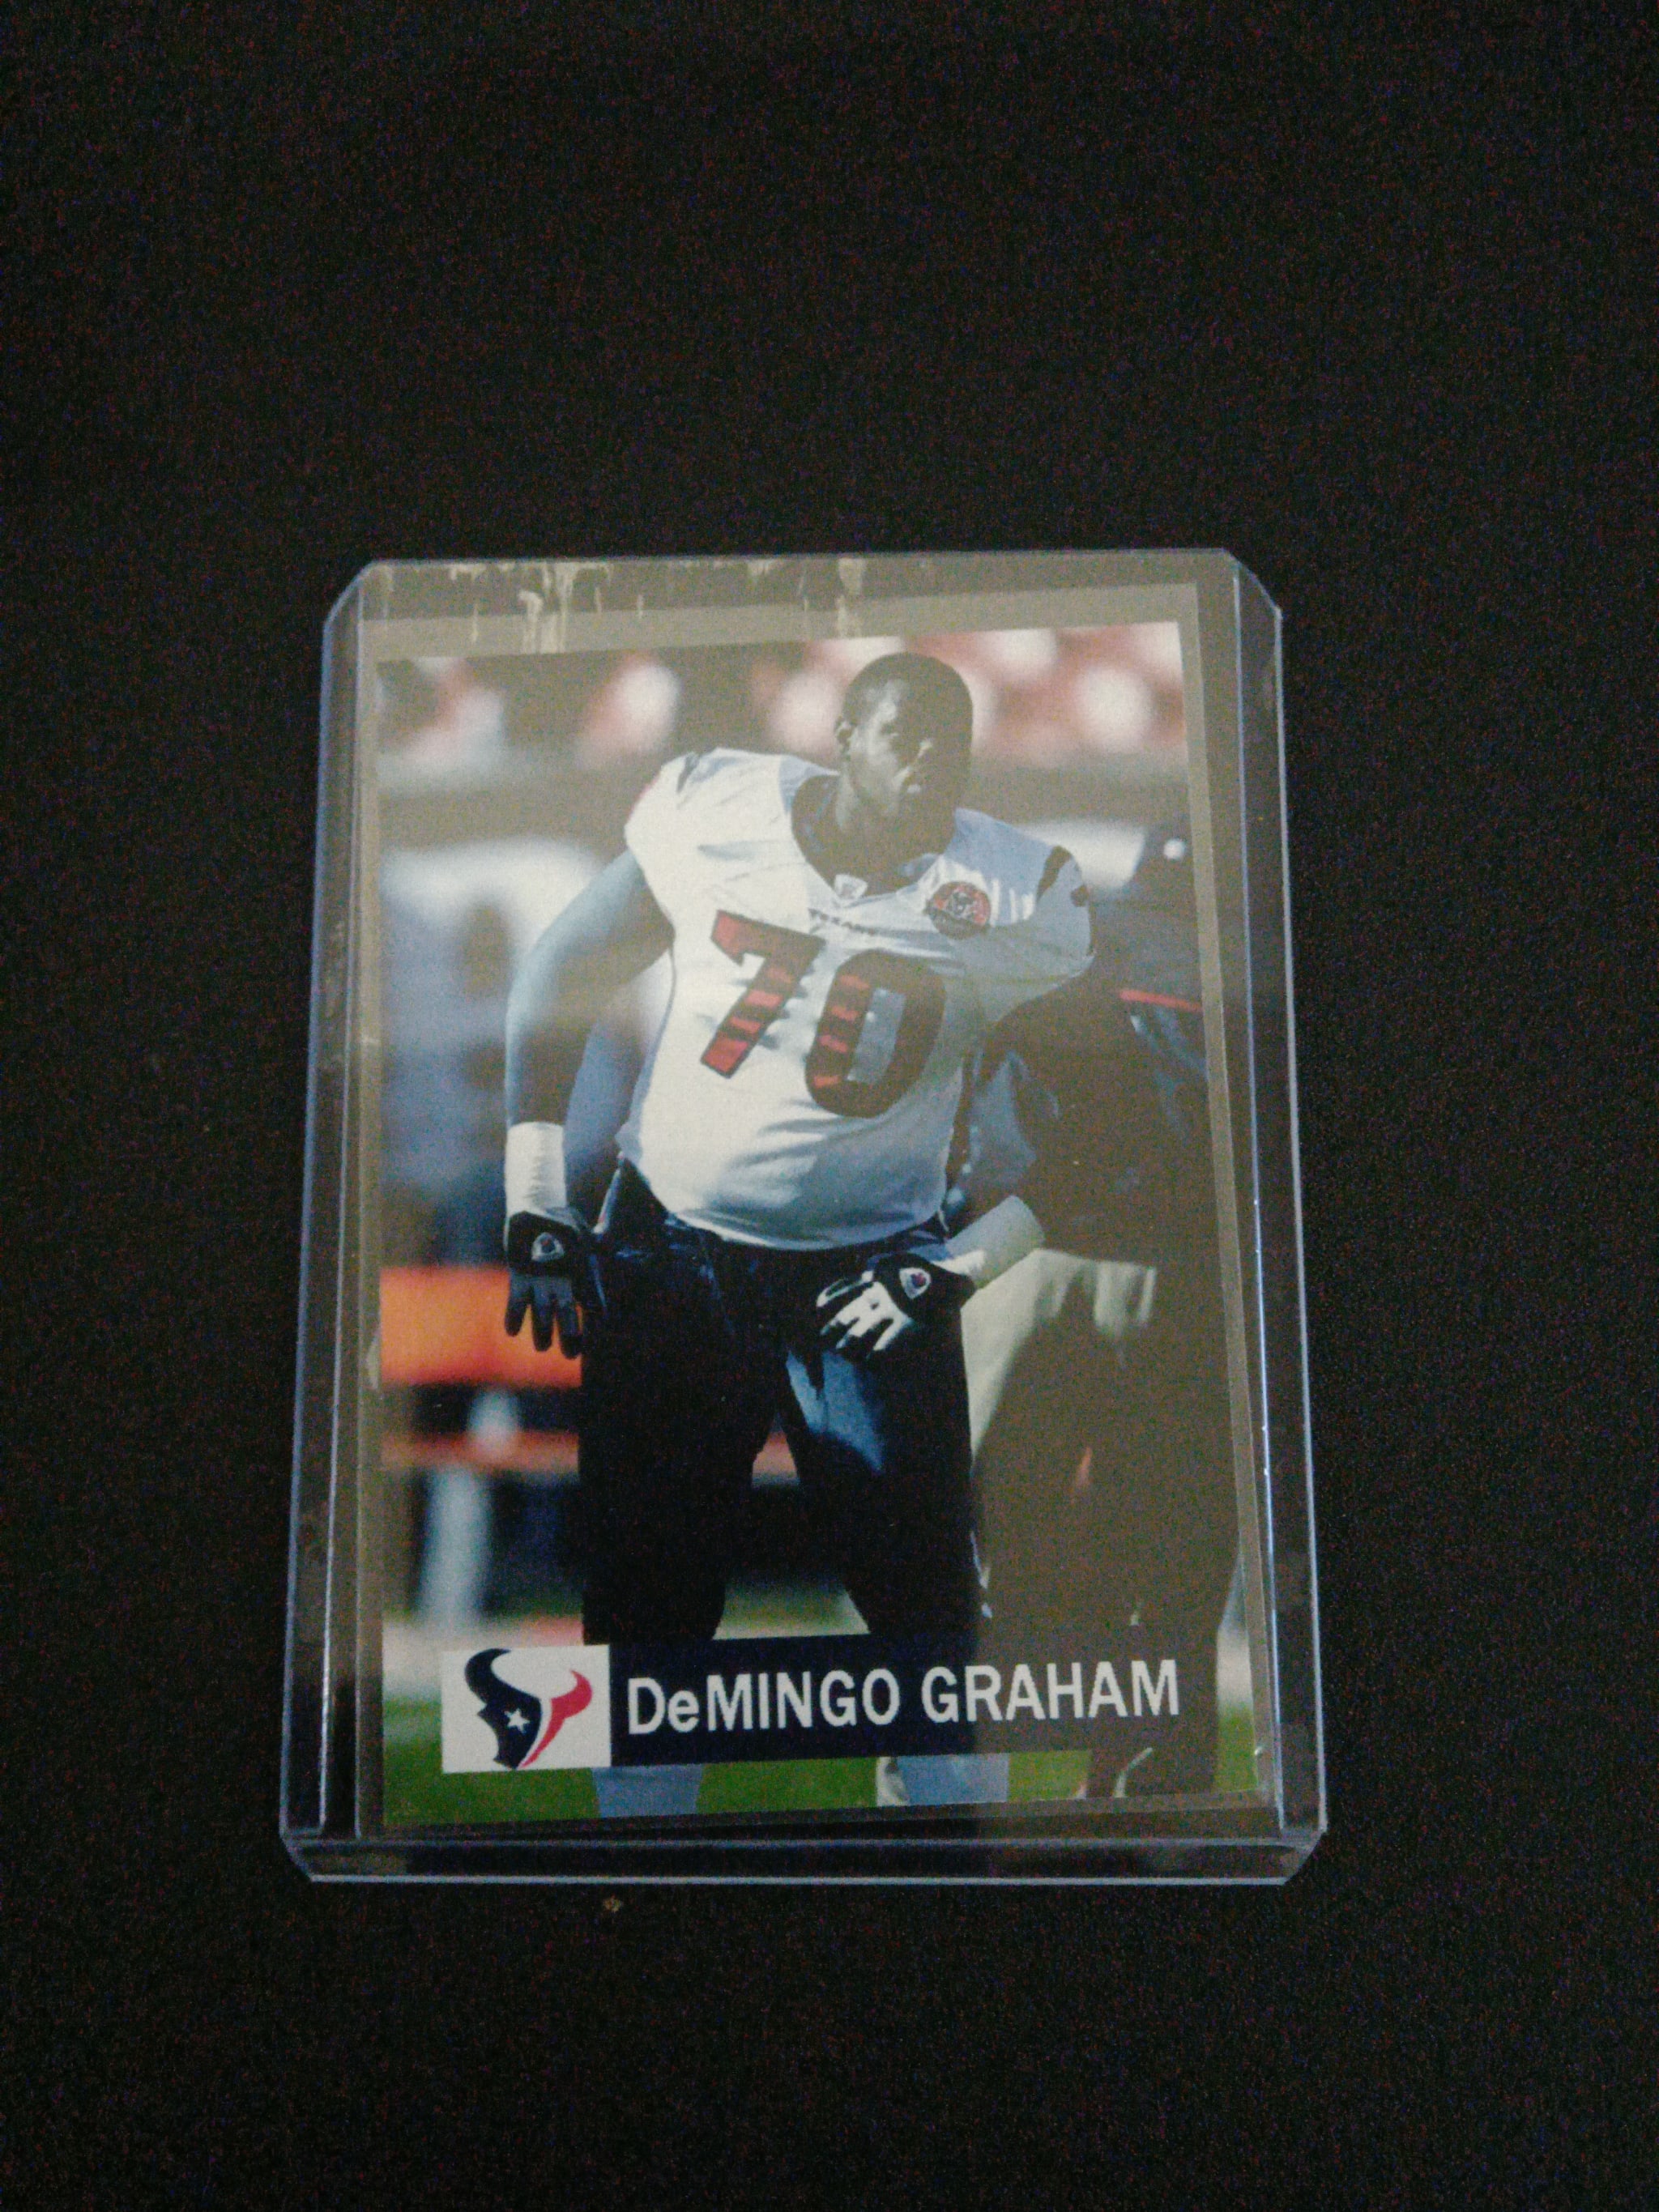 DeMingo Graham Houston Texans (Trade Card)